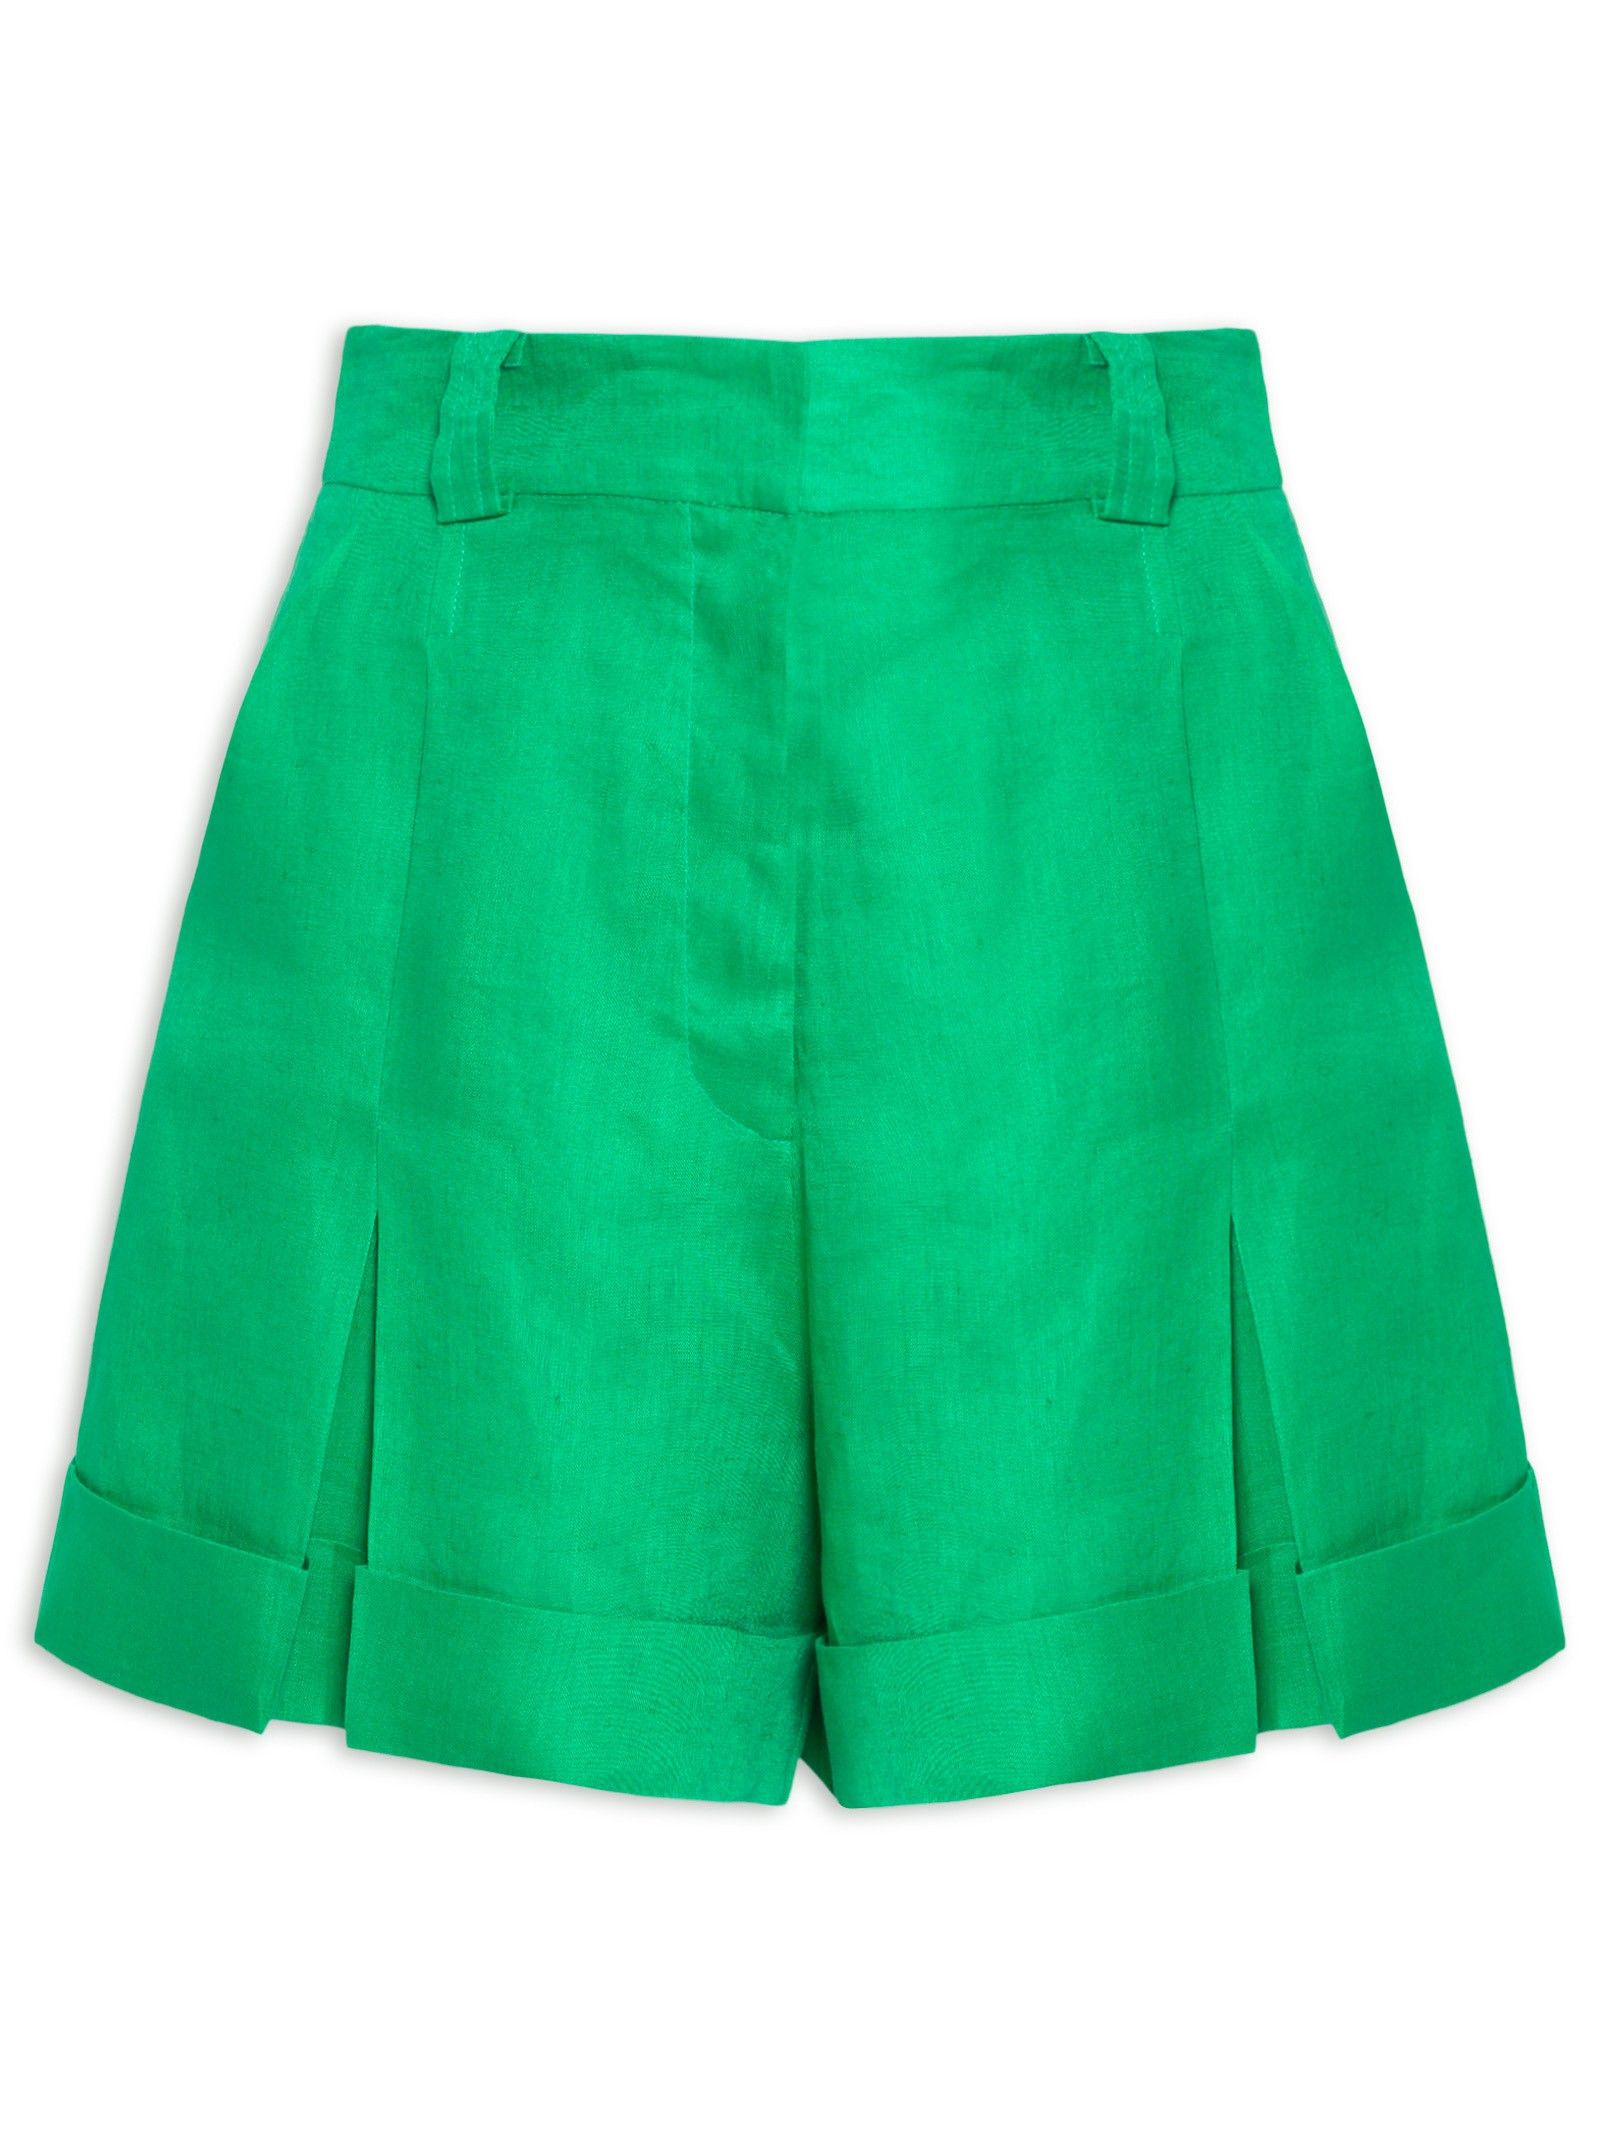 Short Feminino Verte - Verde | Shop2gether (BR)